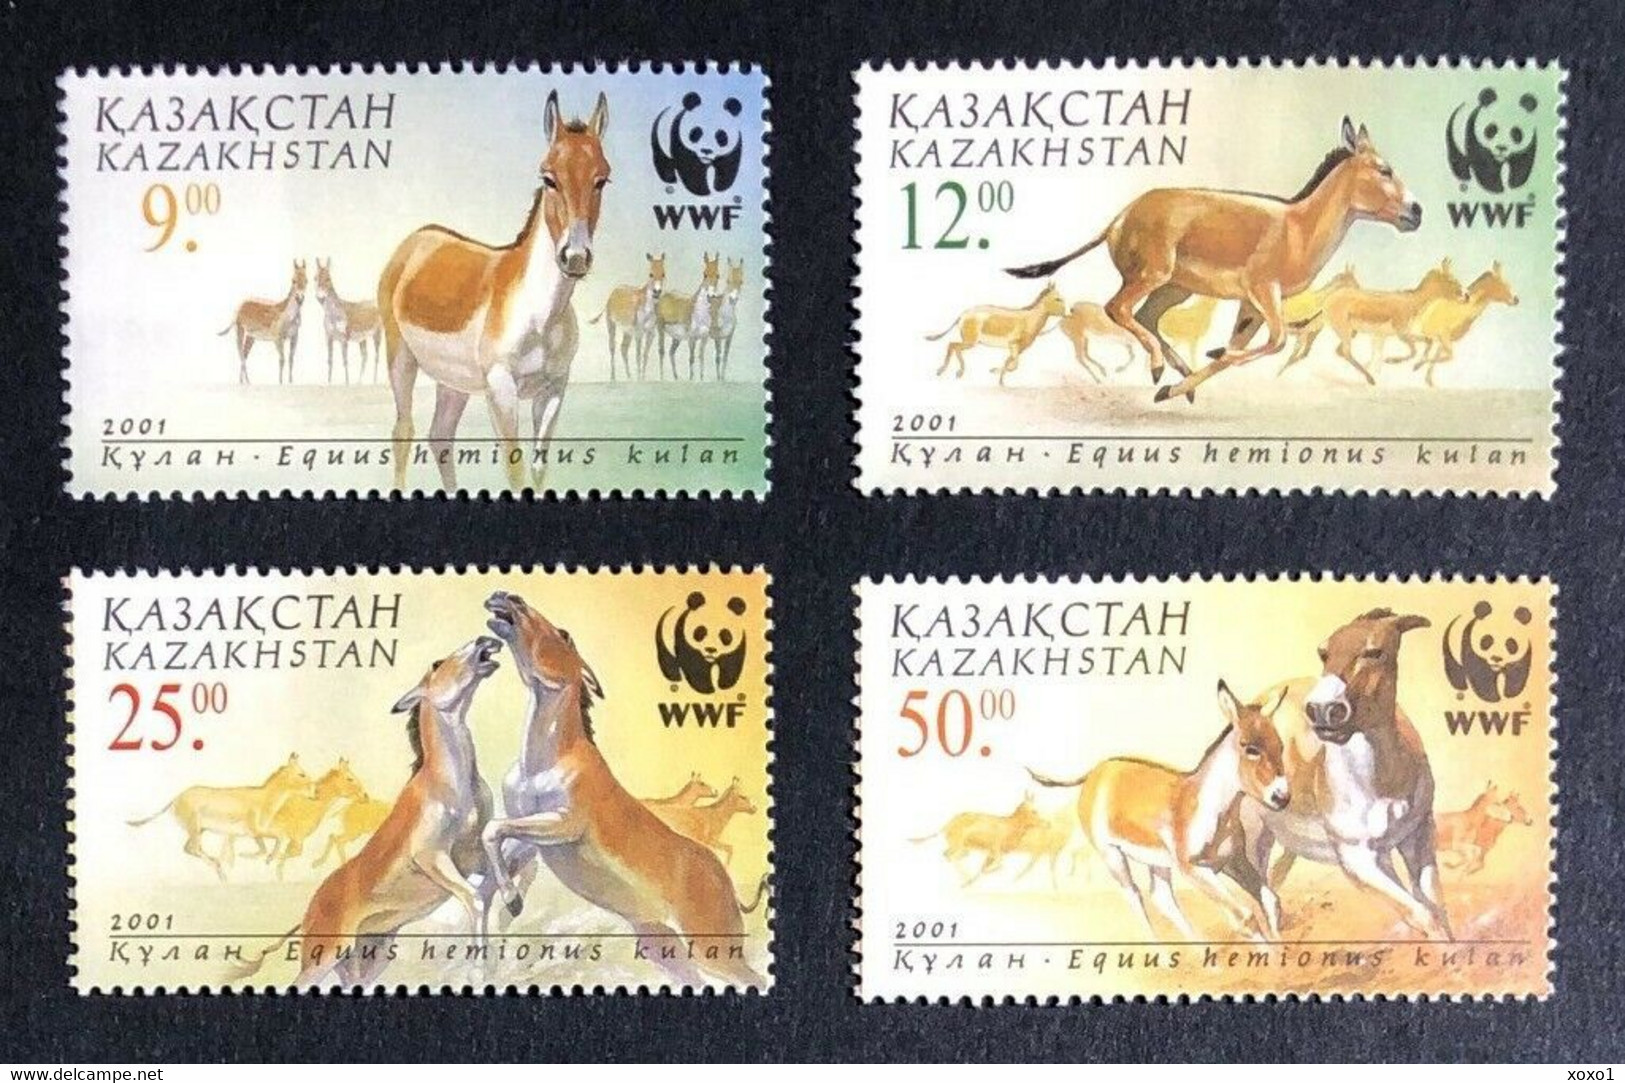 Kazakhstan 1997 MiNr. 345 - 348  Kasachstan  Animals Mammals Onager WWF 4v MNH** 5.00 € - Esel